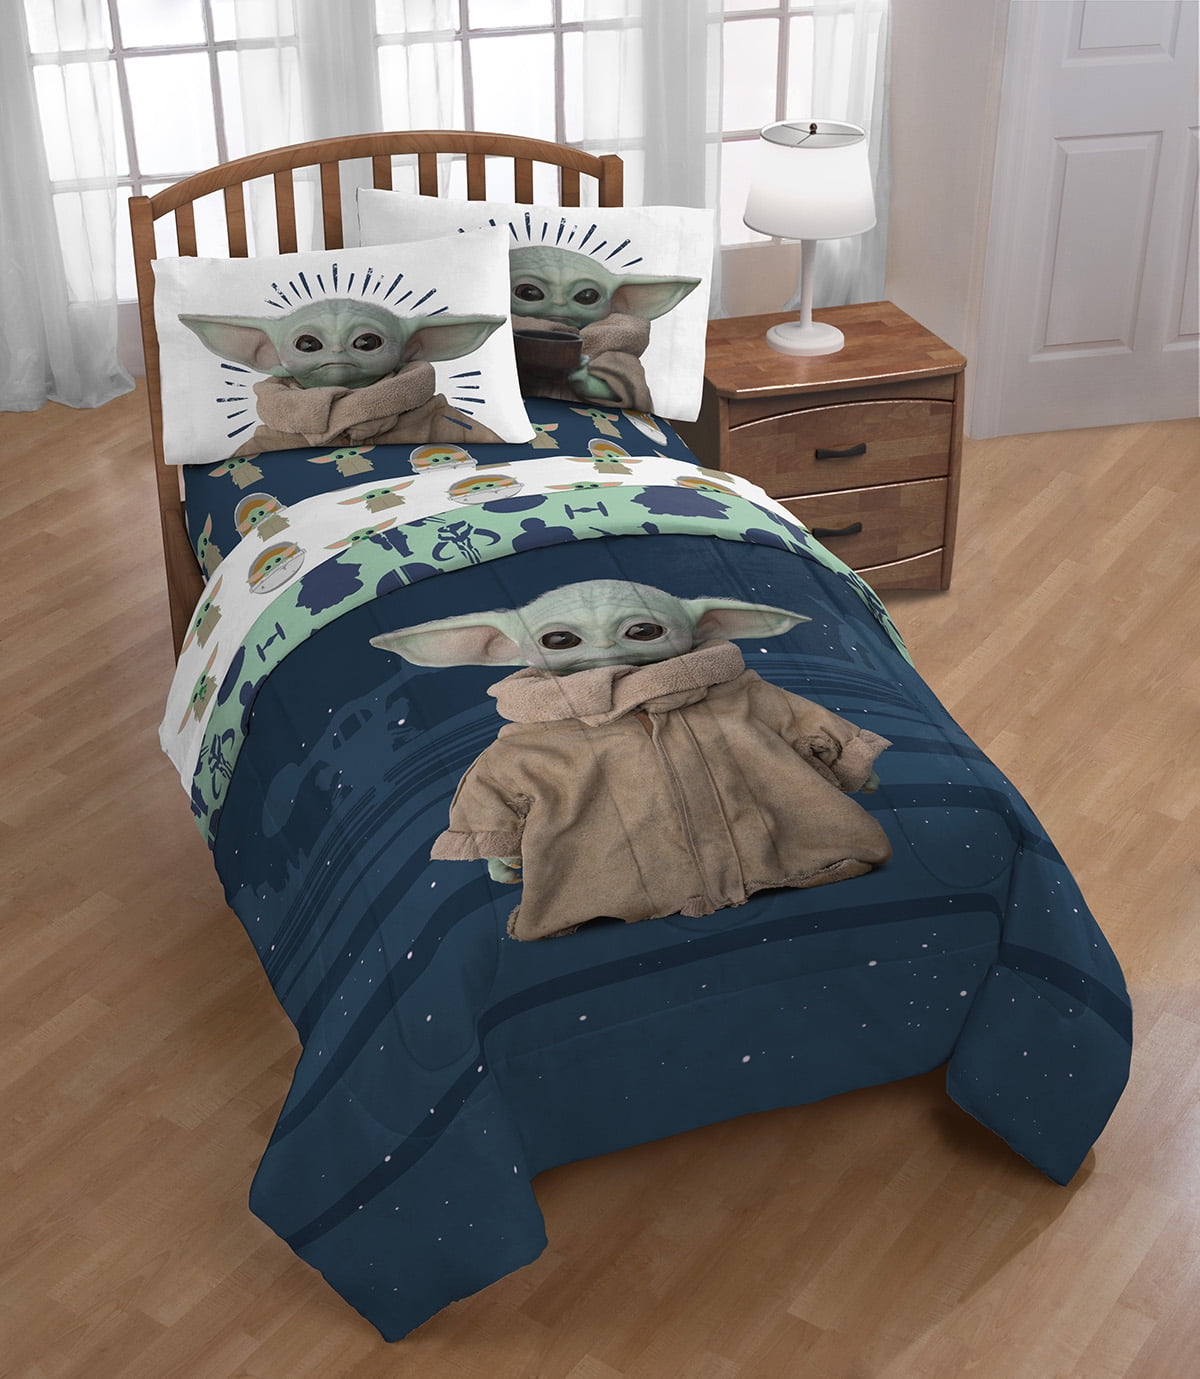 Details about   Star Wars Baby Yoda Comforter & Sheet Sets 6 Piece Full Kids Teens Mandalorian 